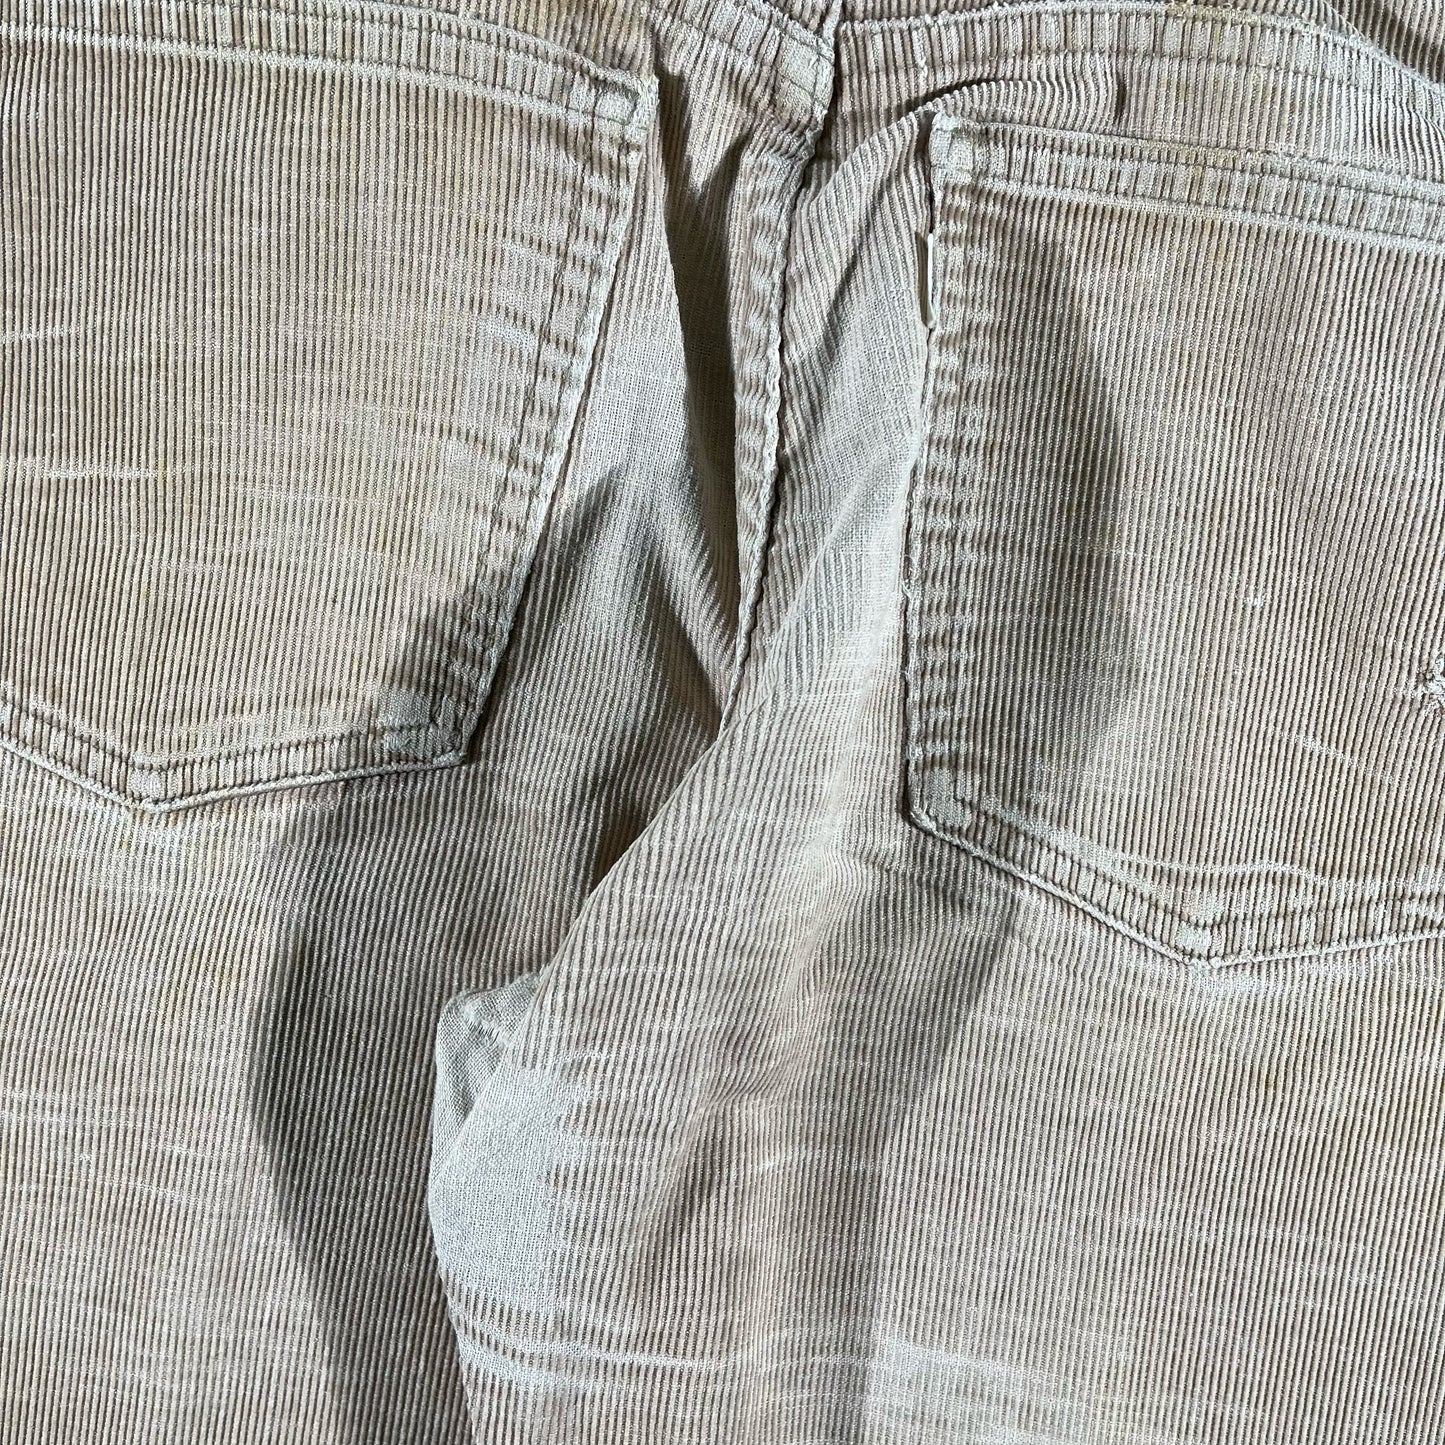 70s Sun Faded Levi's Corduroy Pants- 31x29